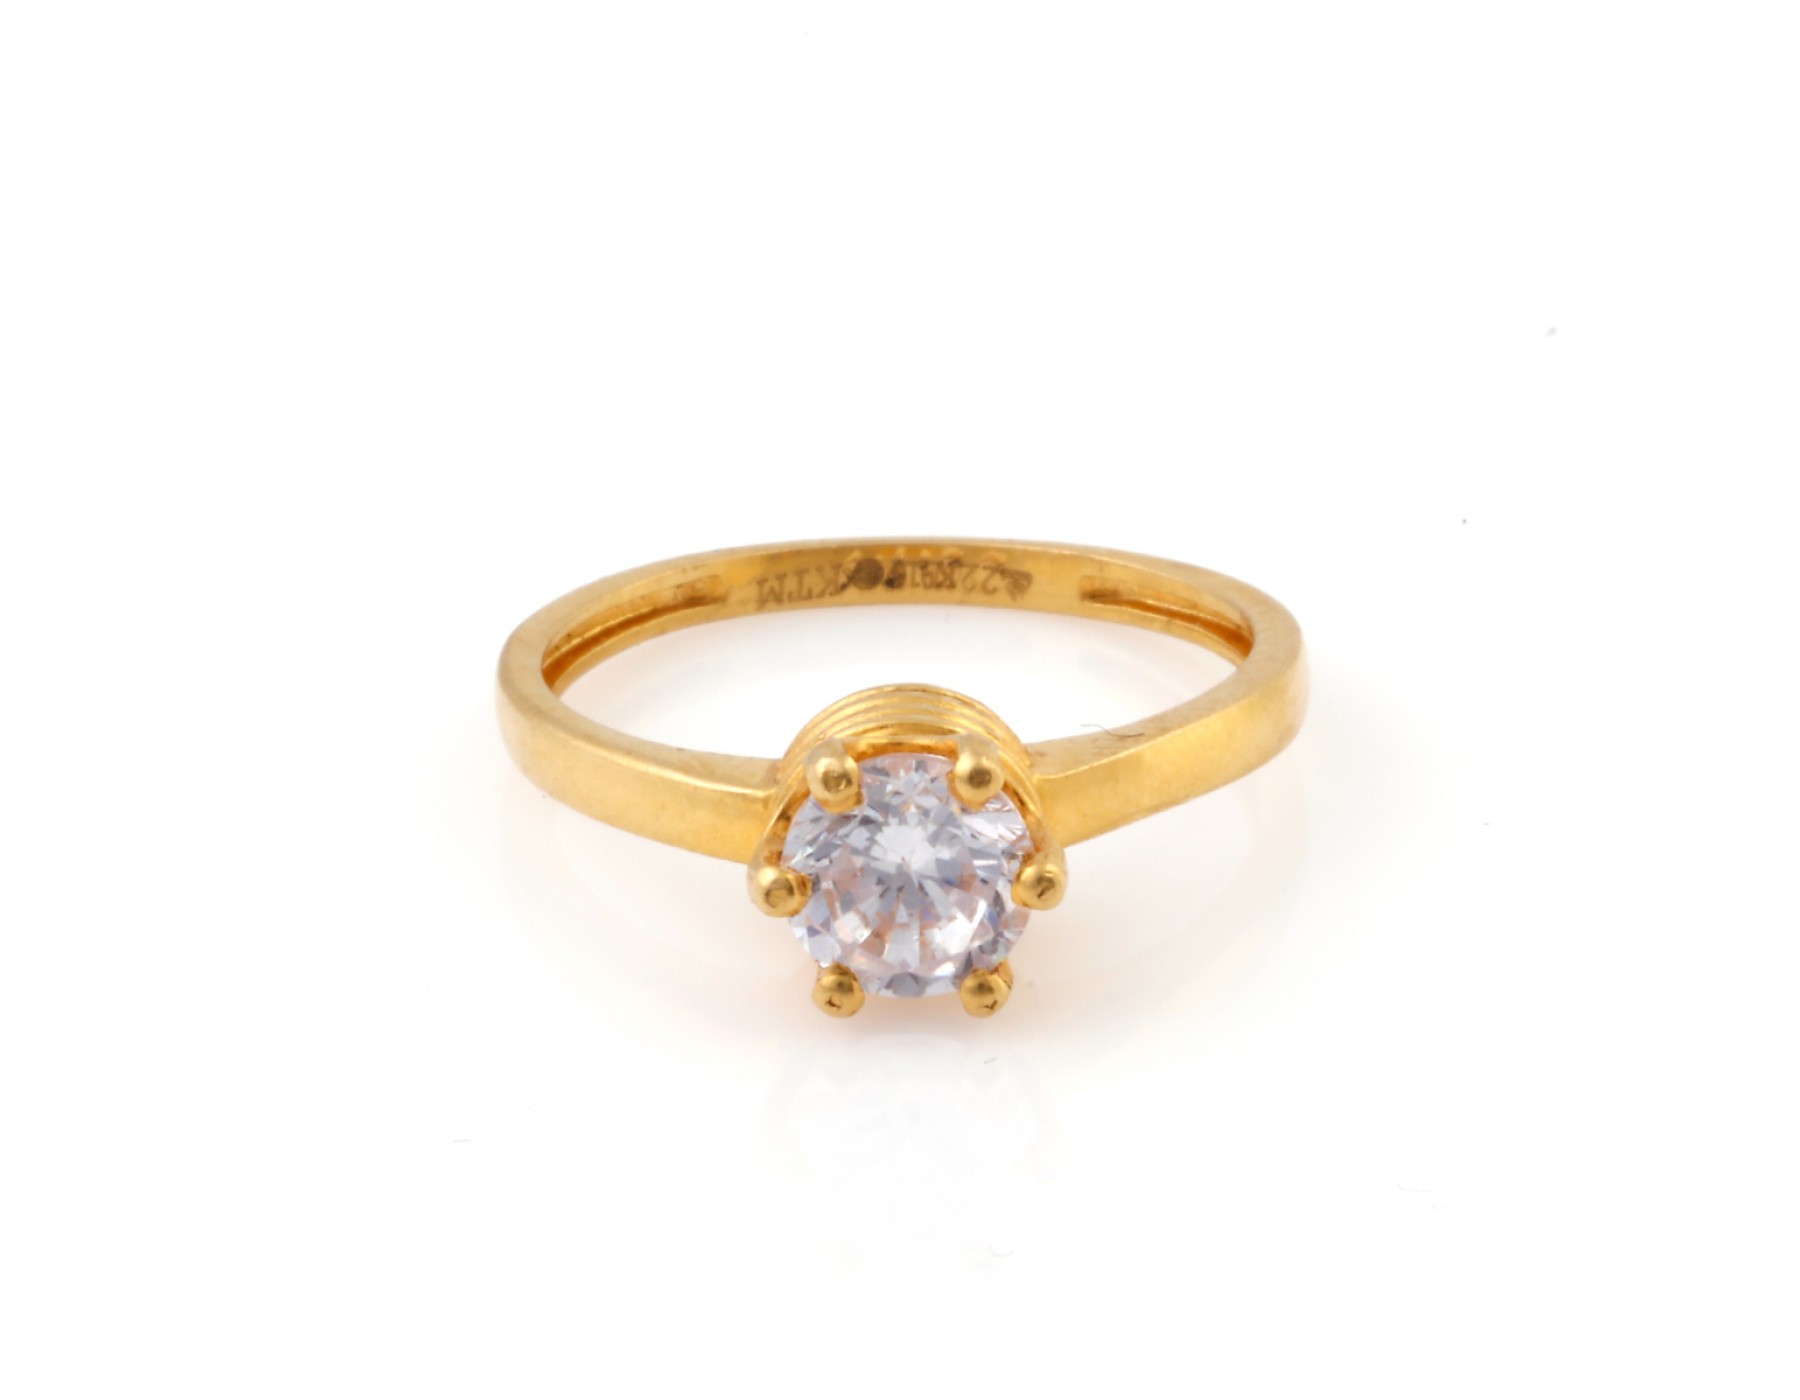 The Fiery Single Stone Yellow Sapphire Ring